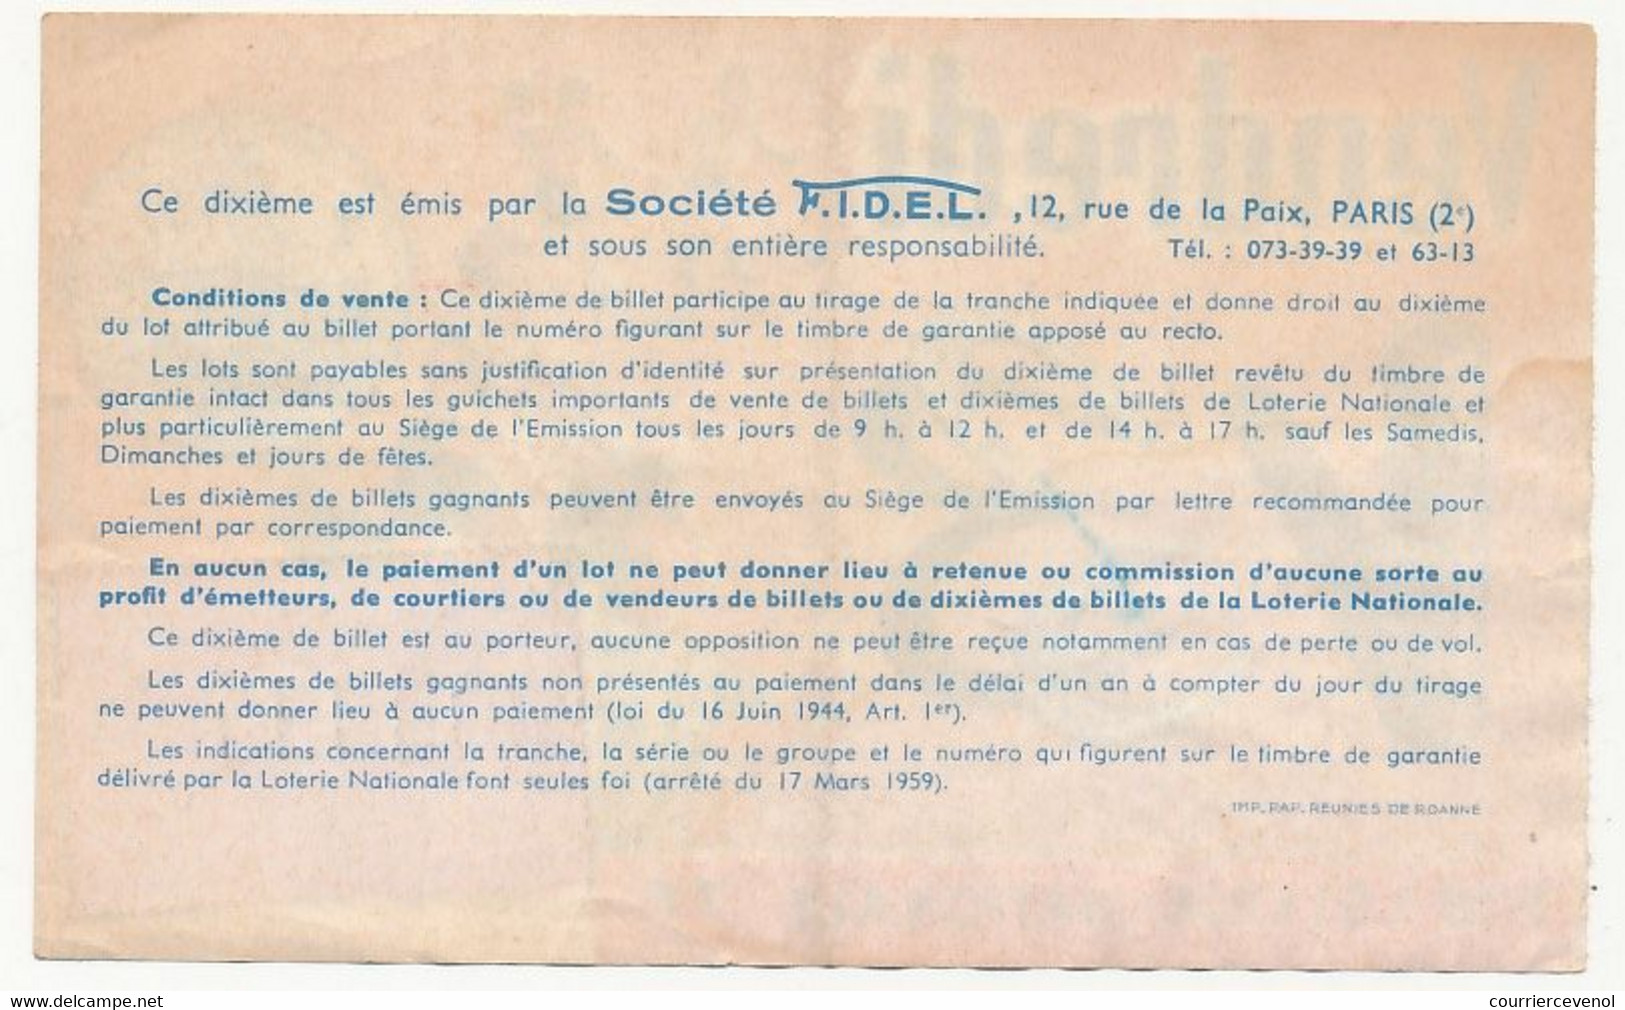 FRANCE - Loterie Nationale - 1/10ème - F.I.D.E.L. - Tranche Du Vendredi 13 - 1973 - Lottery Tickets